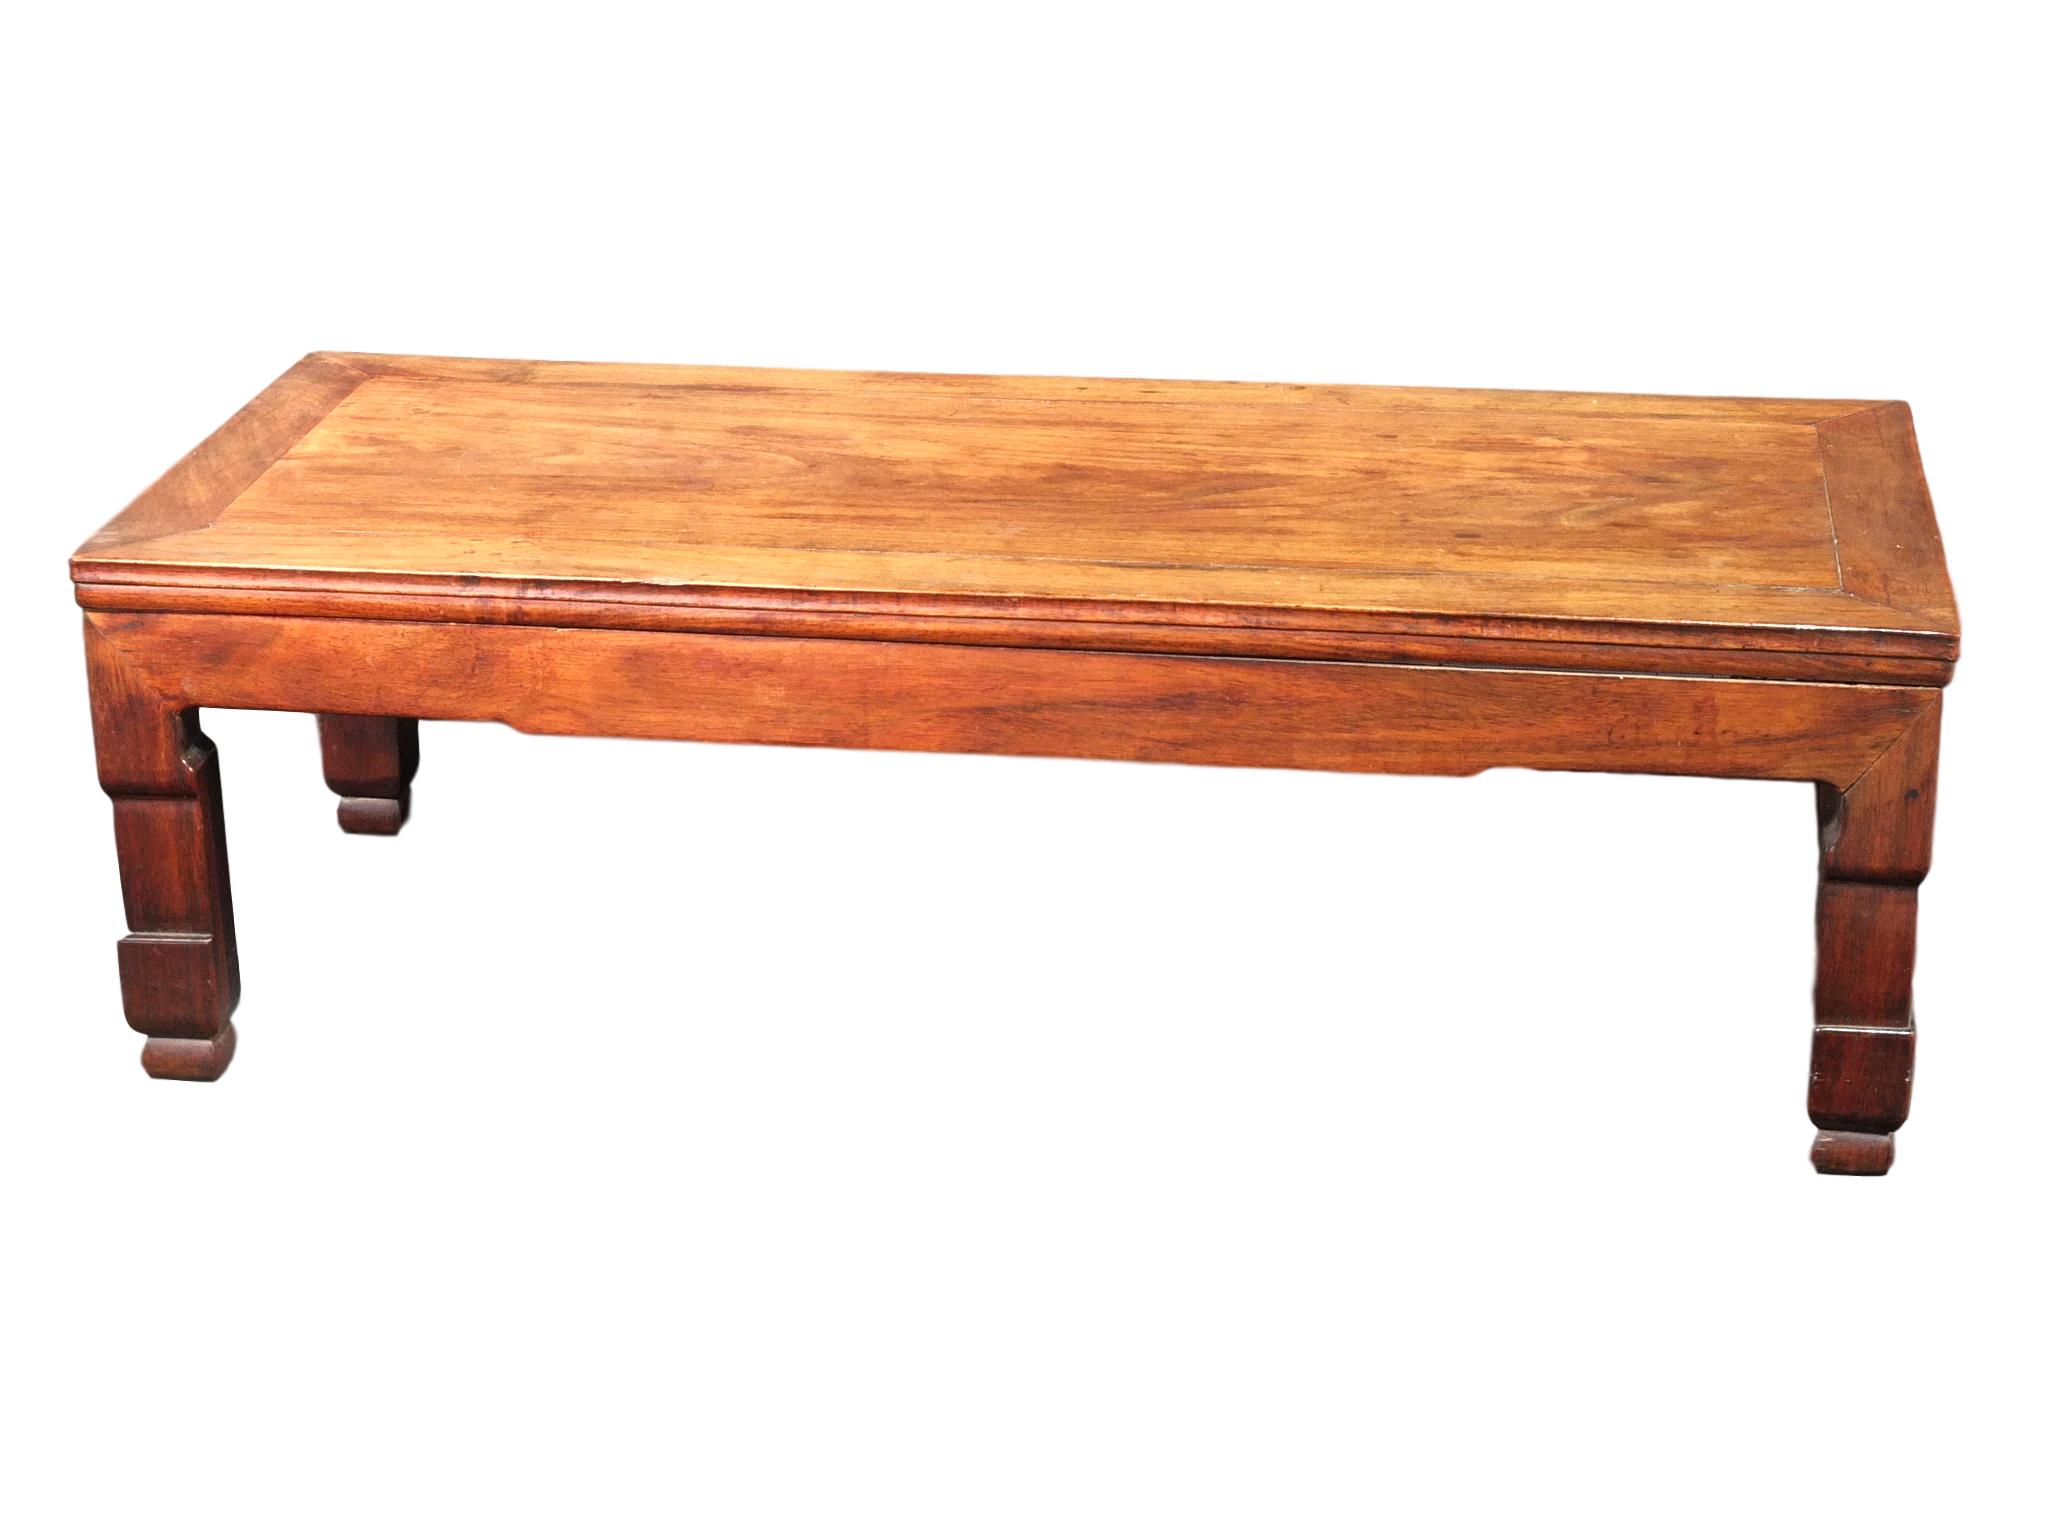 'Chinese Rosewood Kang Table Circa 1900'